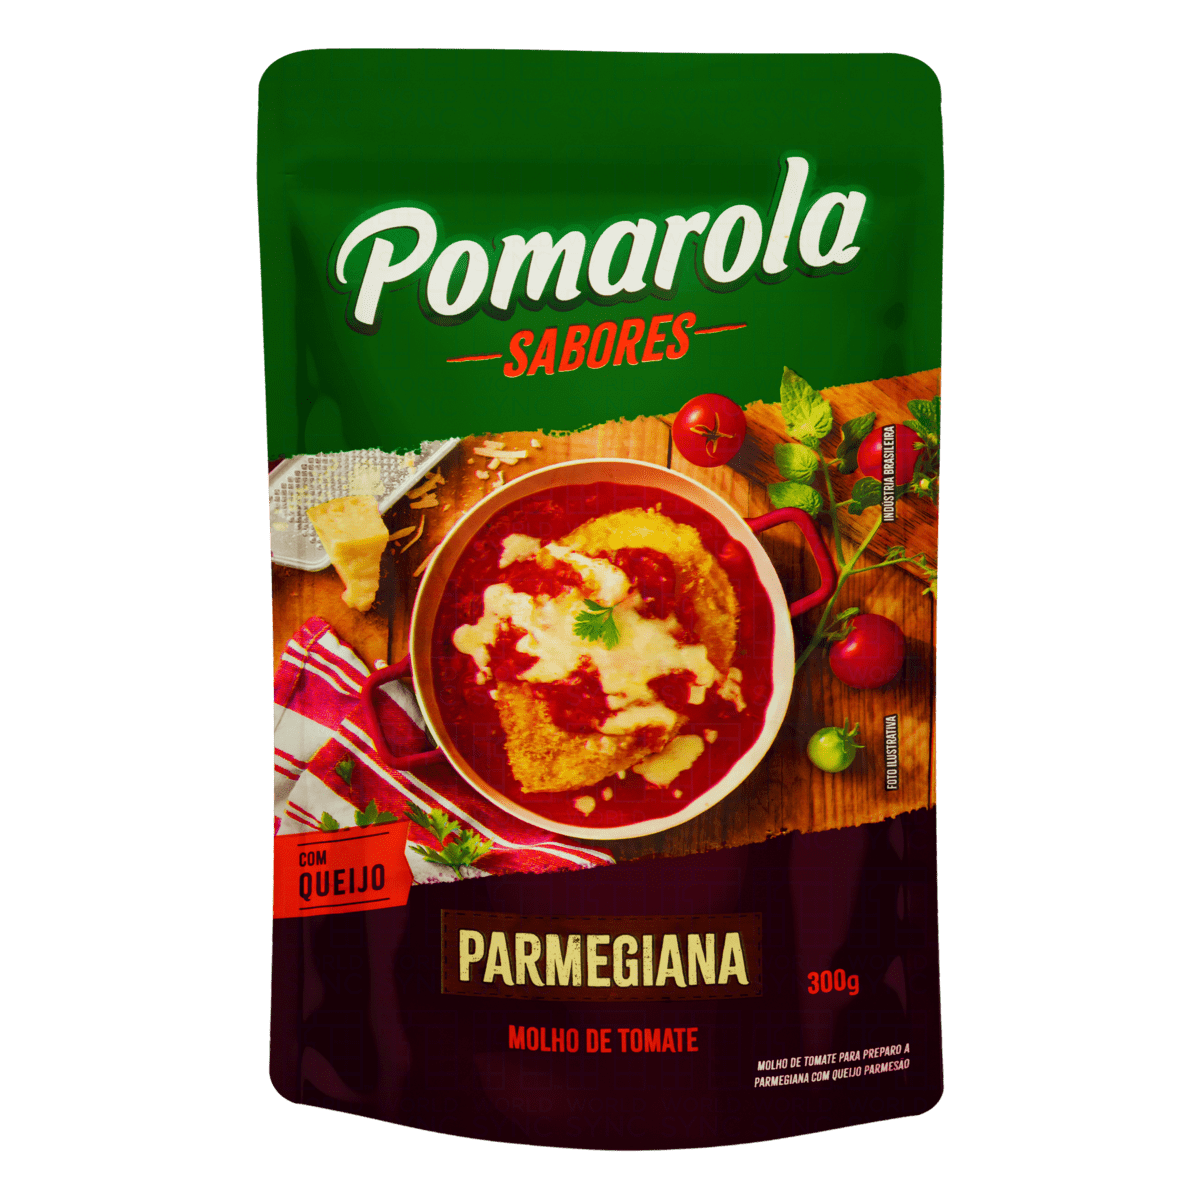 POMAROLA - Parmegianno tomato sauce - 300g - FINAL SALE - EXPIRED or CLOSE TO EXPIRY